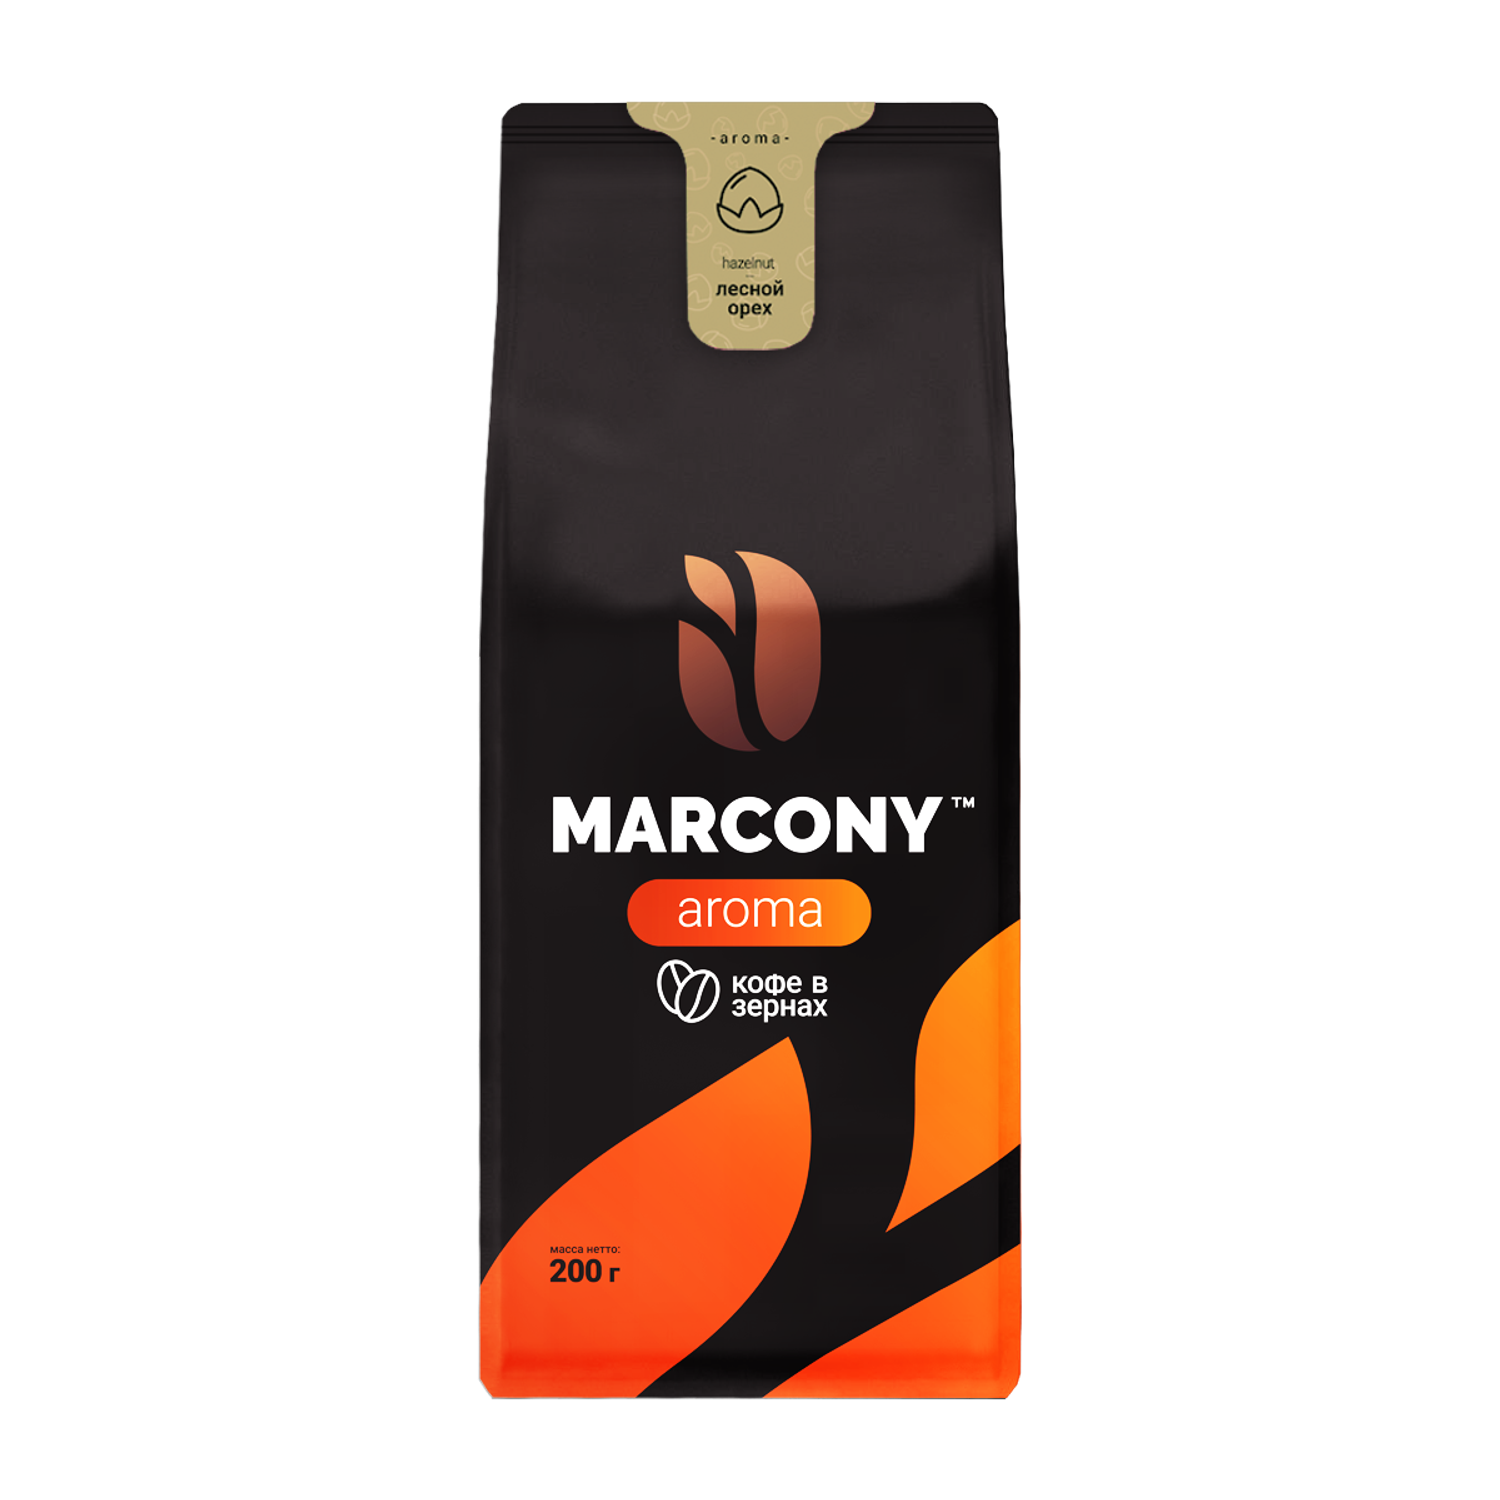 Кофе в зернах Marcony Aroma со вкусом Лесного ореха 200 г - фото 1